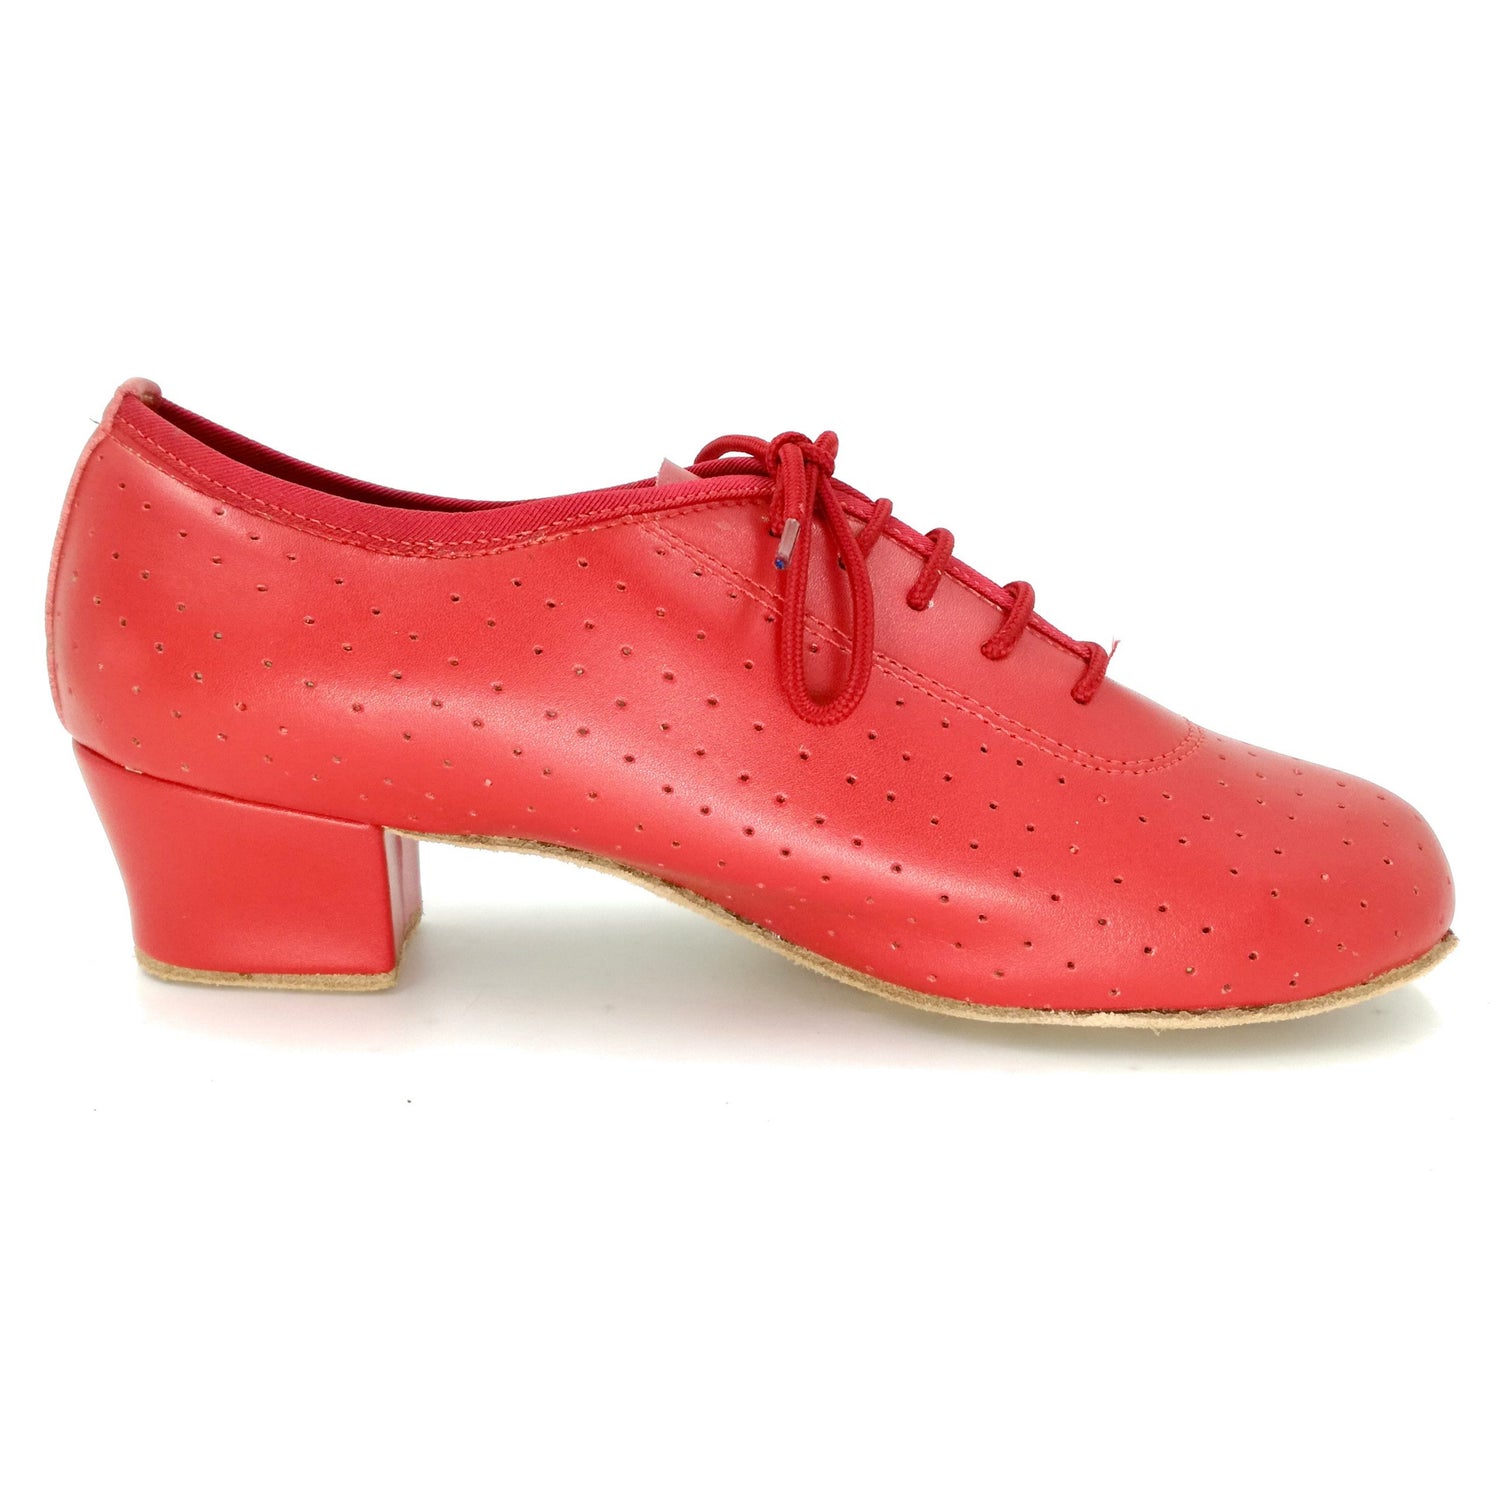 Women red suede sole ballroom dancing shoes for Latin, Tango4